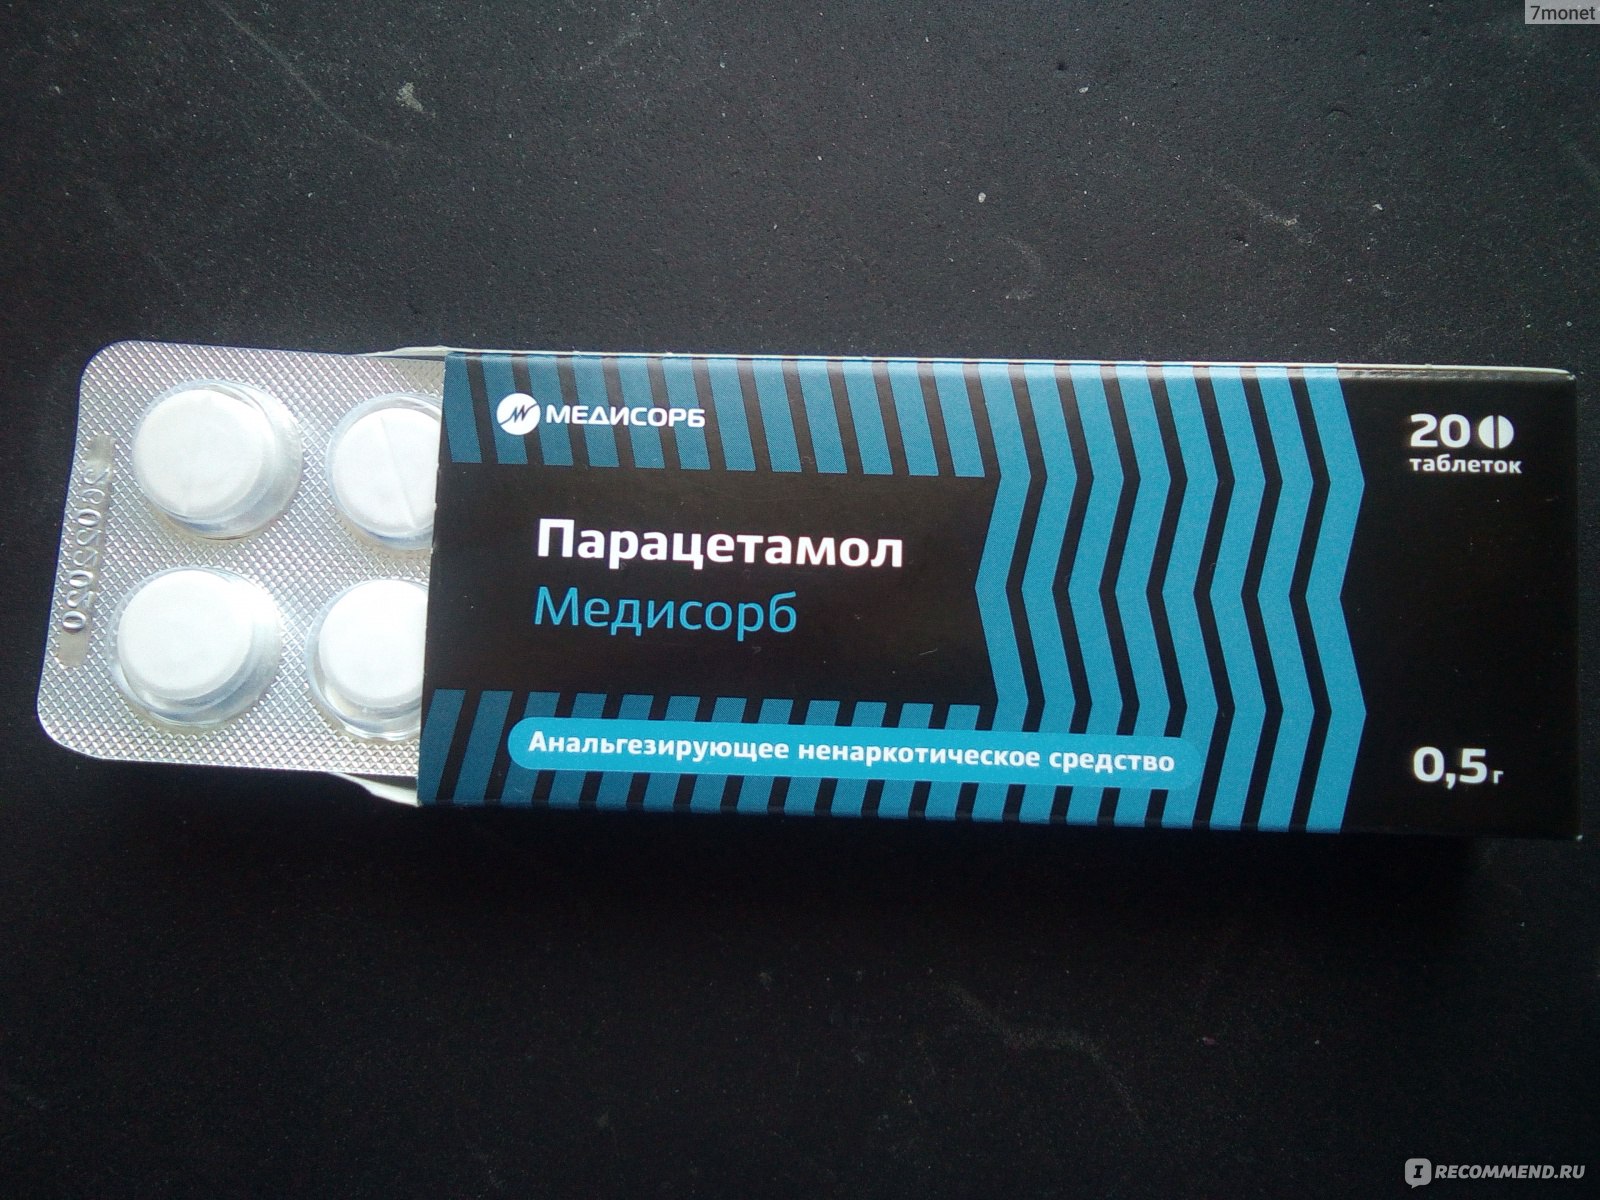 Таблетки Медисорб Парацетамол МС 500 мг - «проверено многолетним опытом .